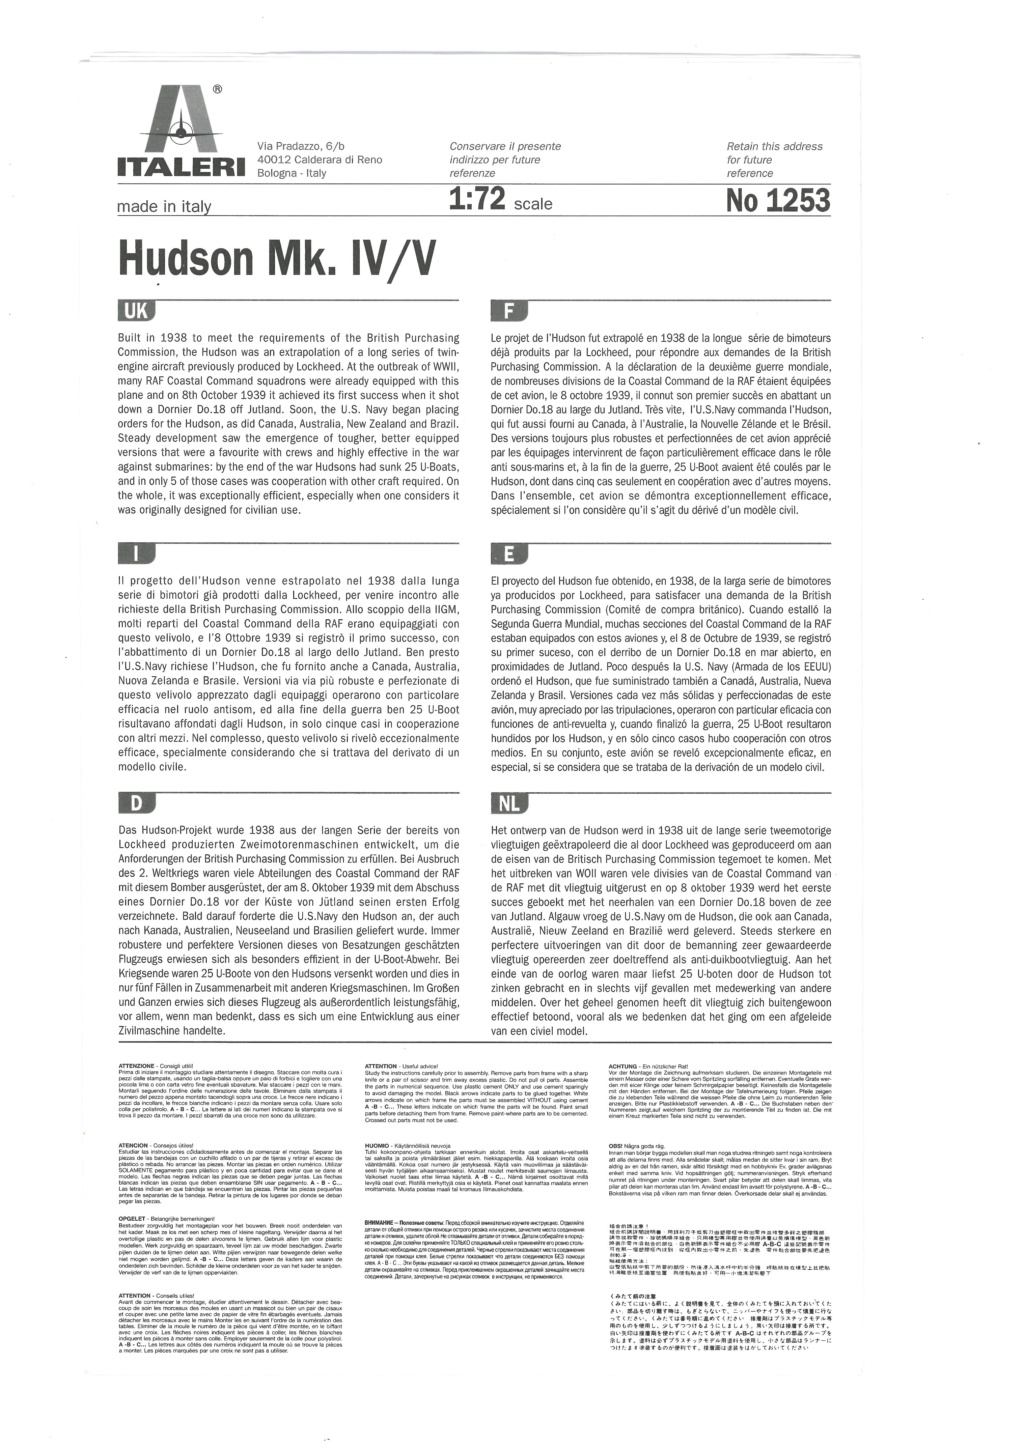 [ITALERI] LOCKHEED HUDSON Mk IV/V 1/72ème Réf 1253 Notice Itale968